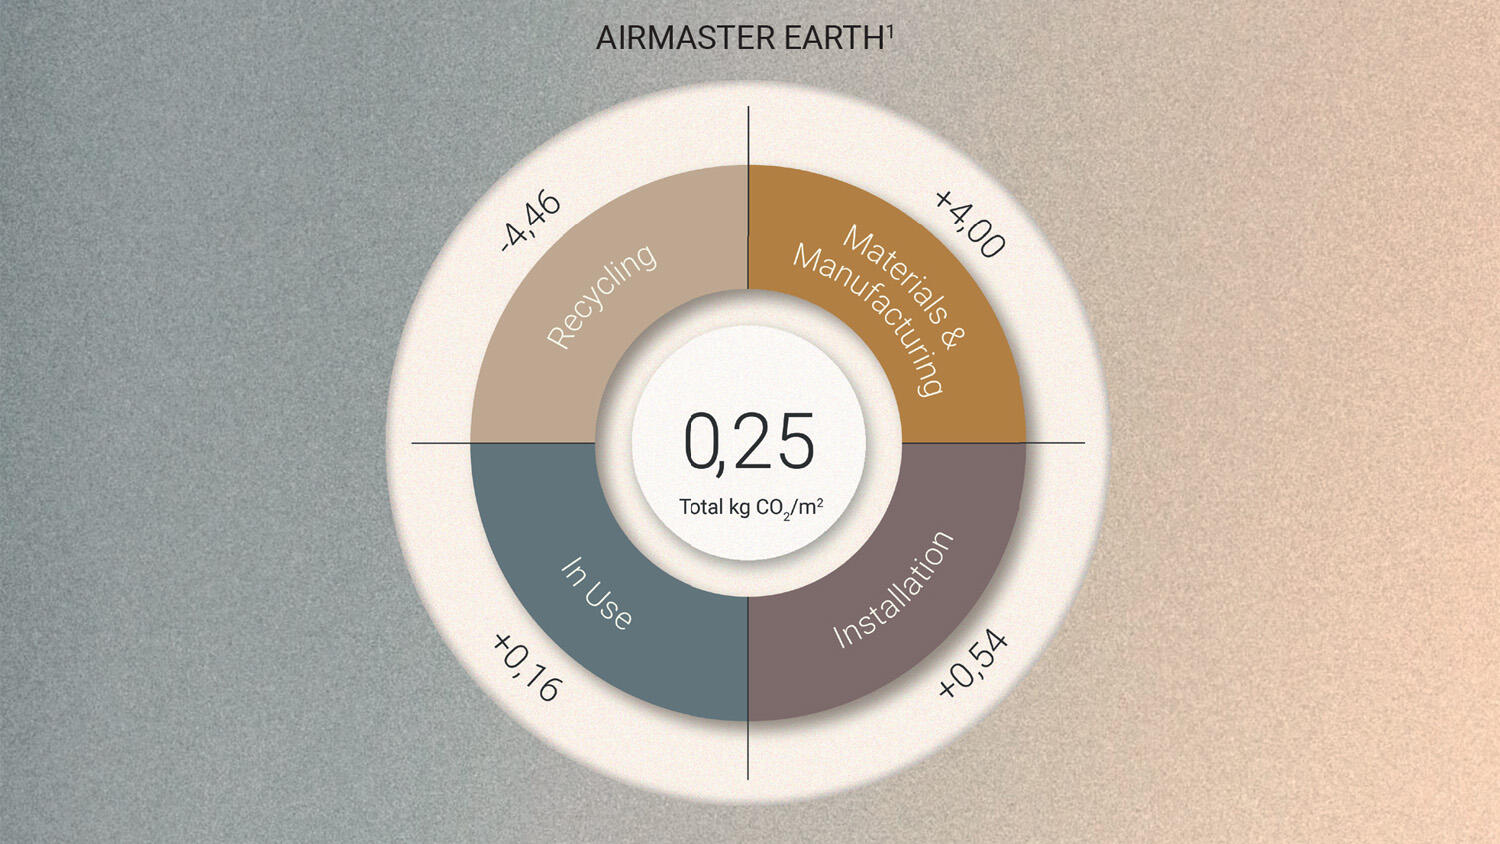 DESSO AirMaster Earth Circular Carbon Footprint